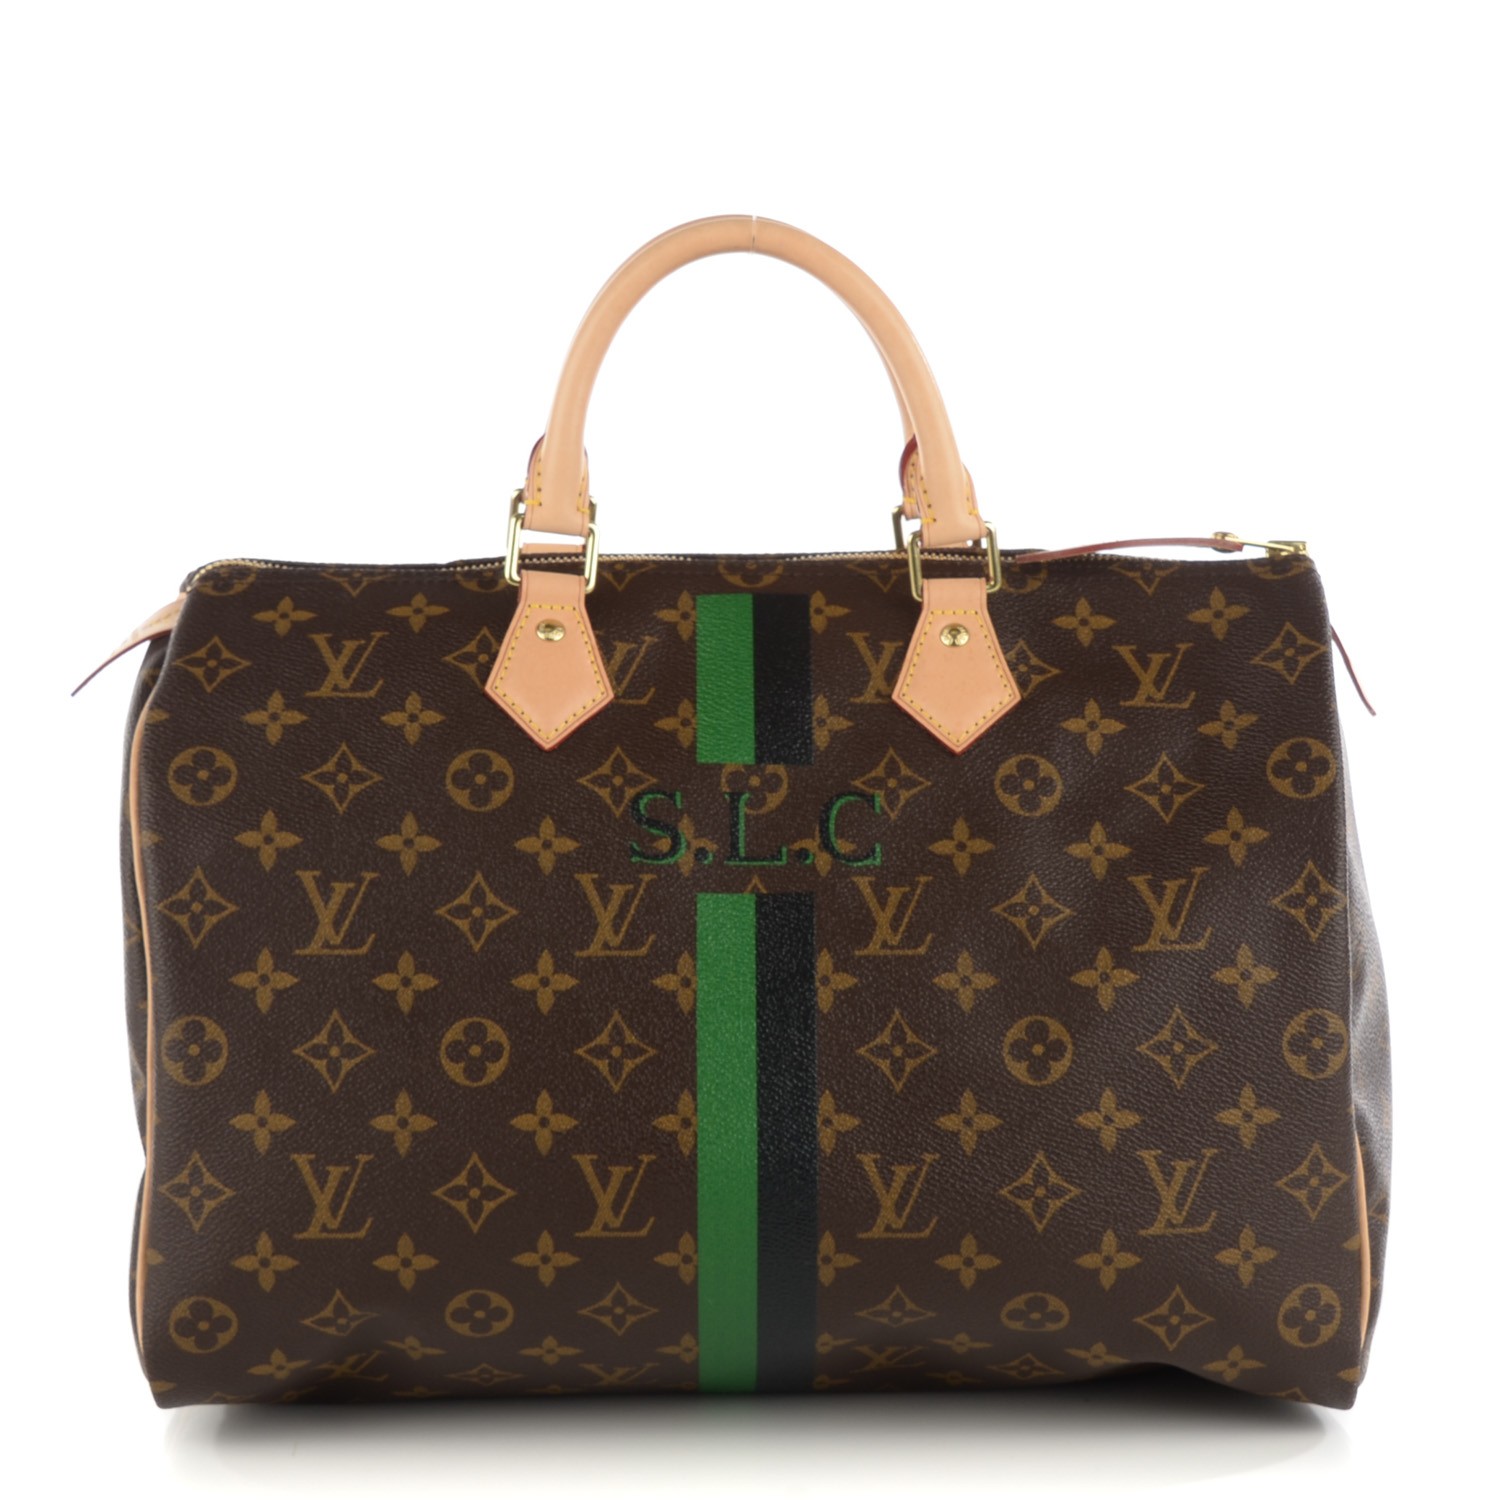 Louis+Vuitton+Speedy+Bandouliere+Monogramouflage+Duffle+35+Green+